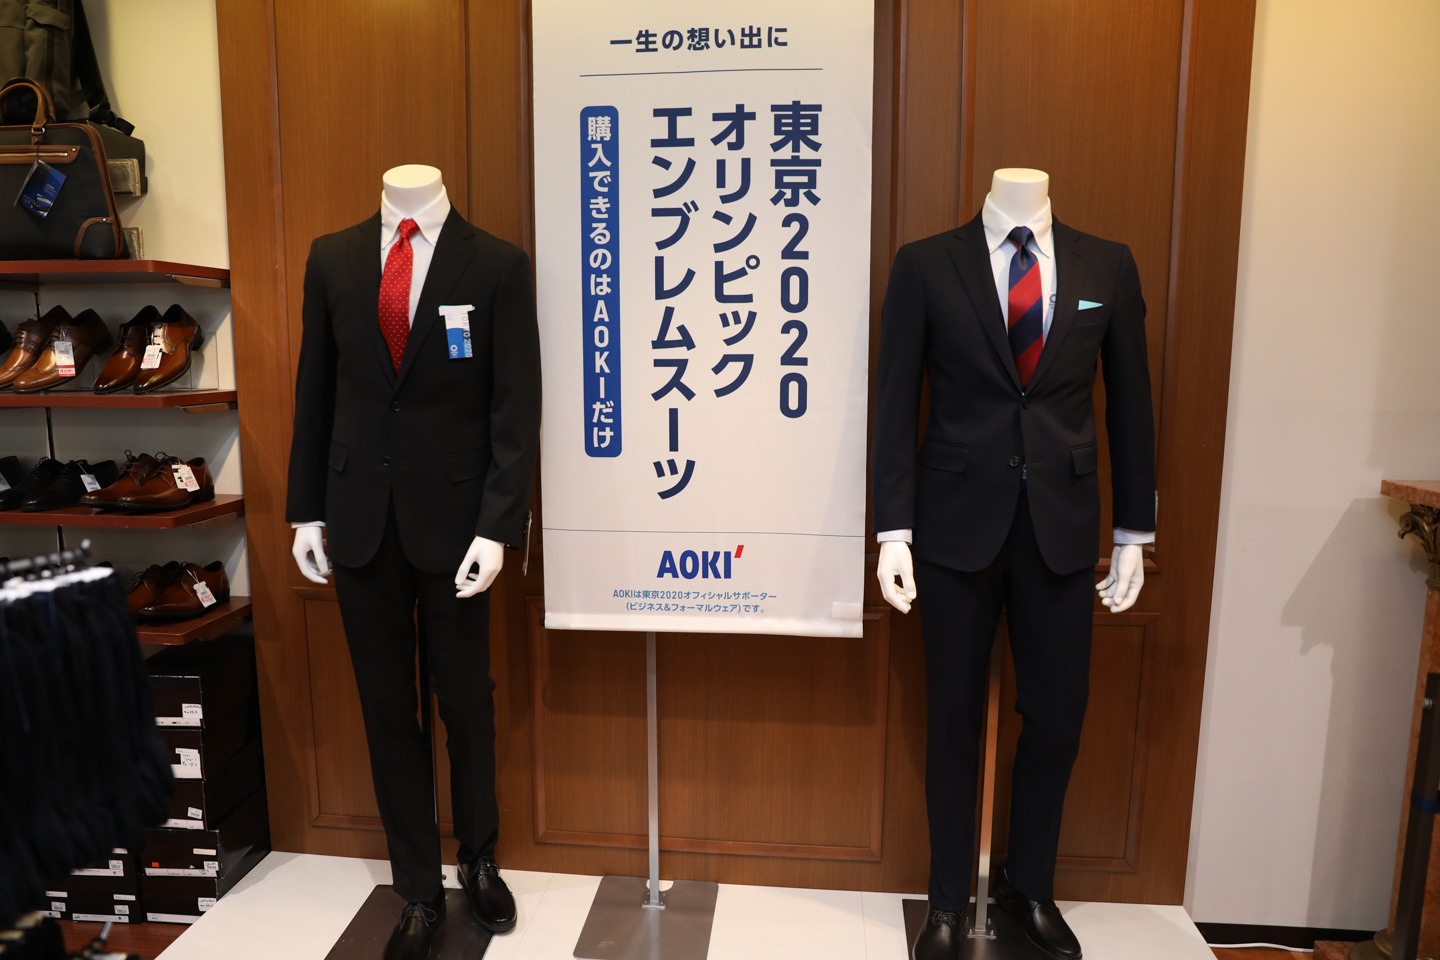 SALE／95%OFF】 AOKI オリンピック 2020 TOKYO アオキ スーツ